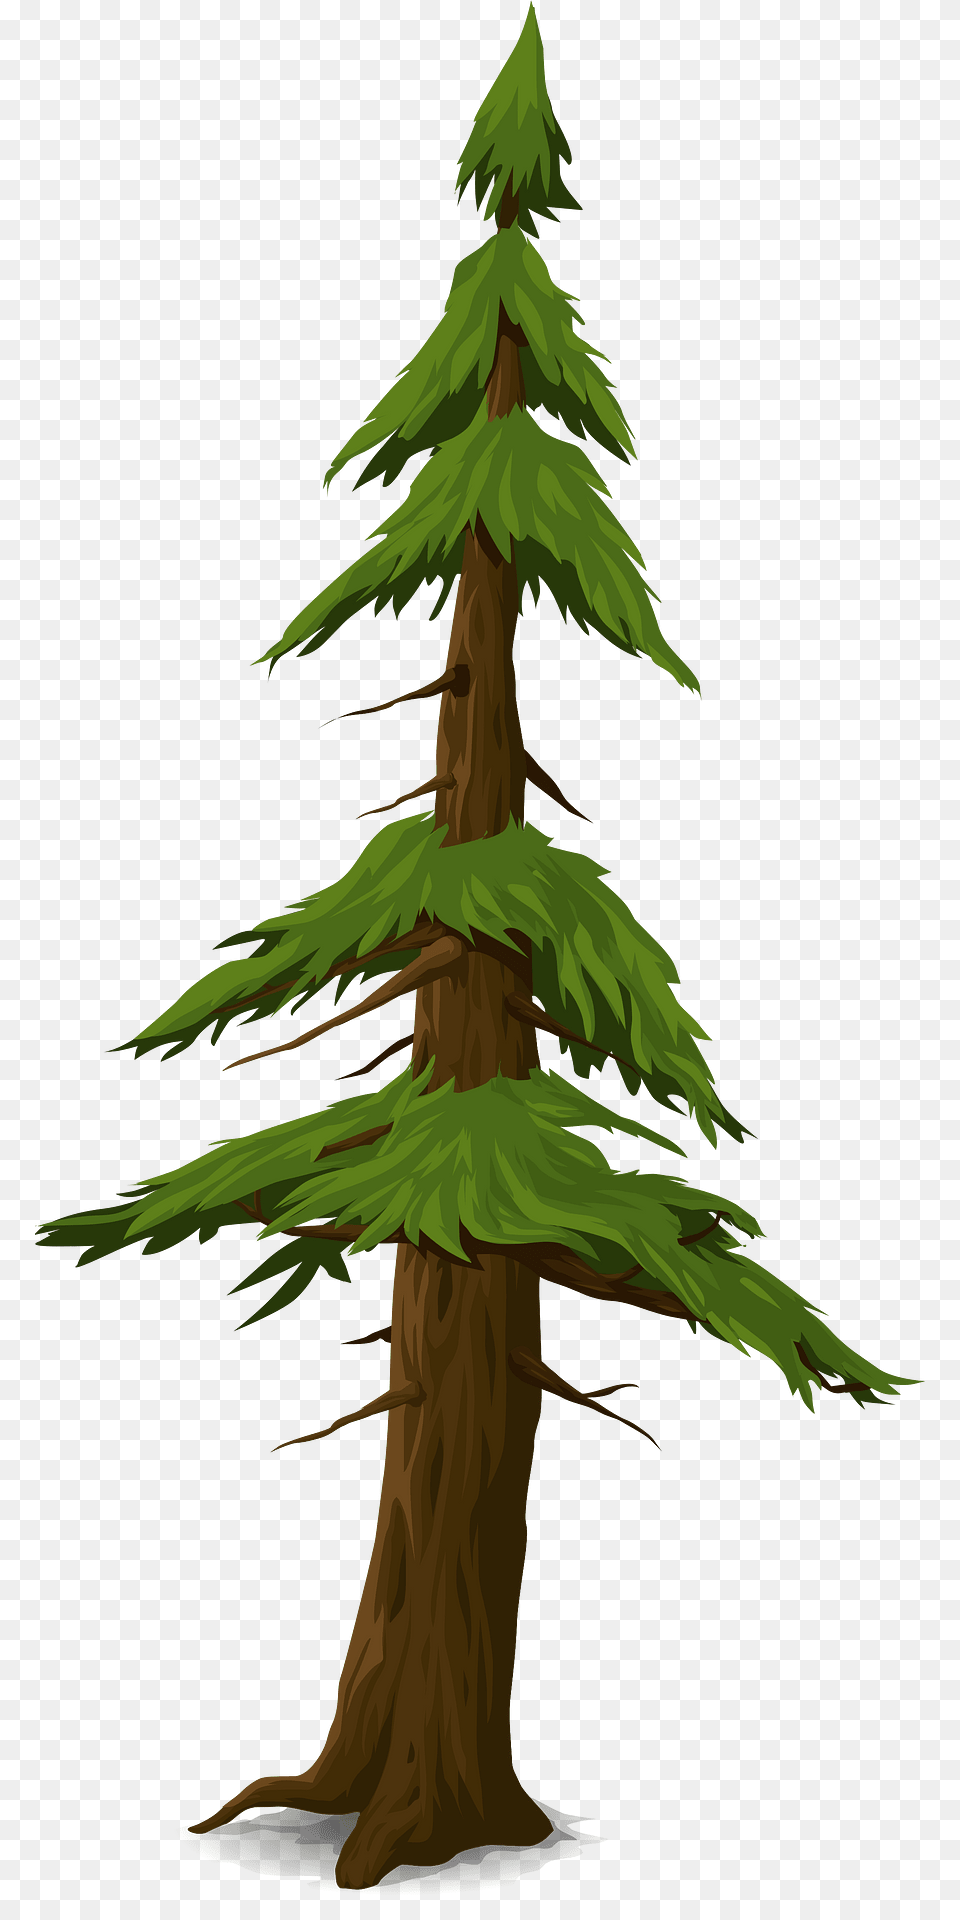 Green Coniferous Tree Clipart, Conifer, Fir, Plant, Pine Free Transparent Png